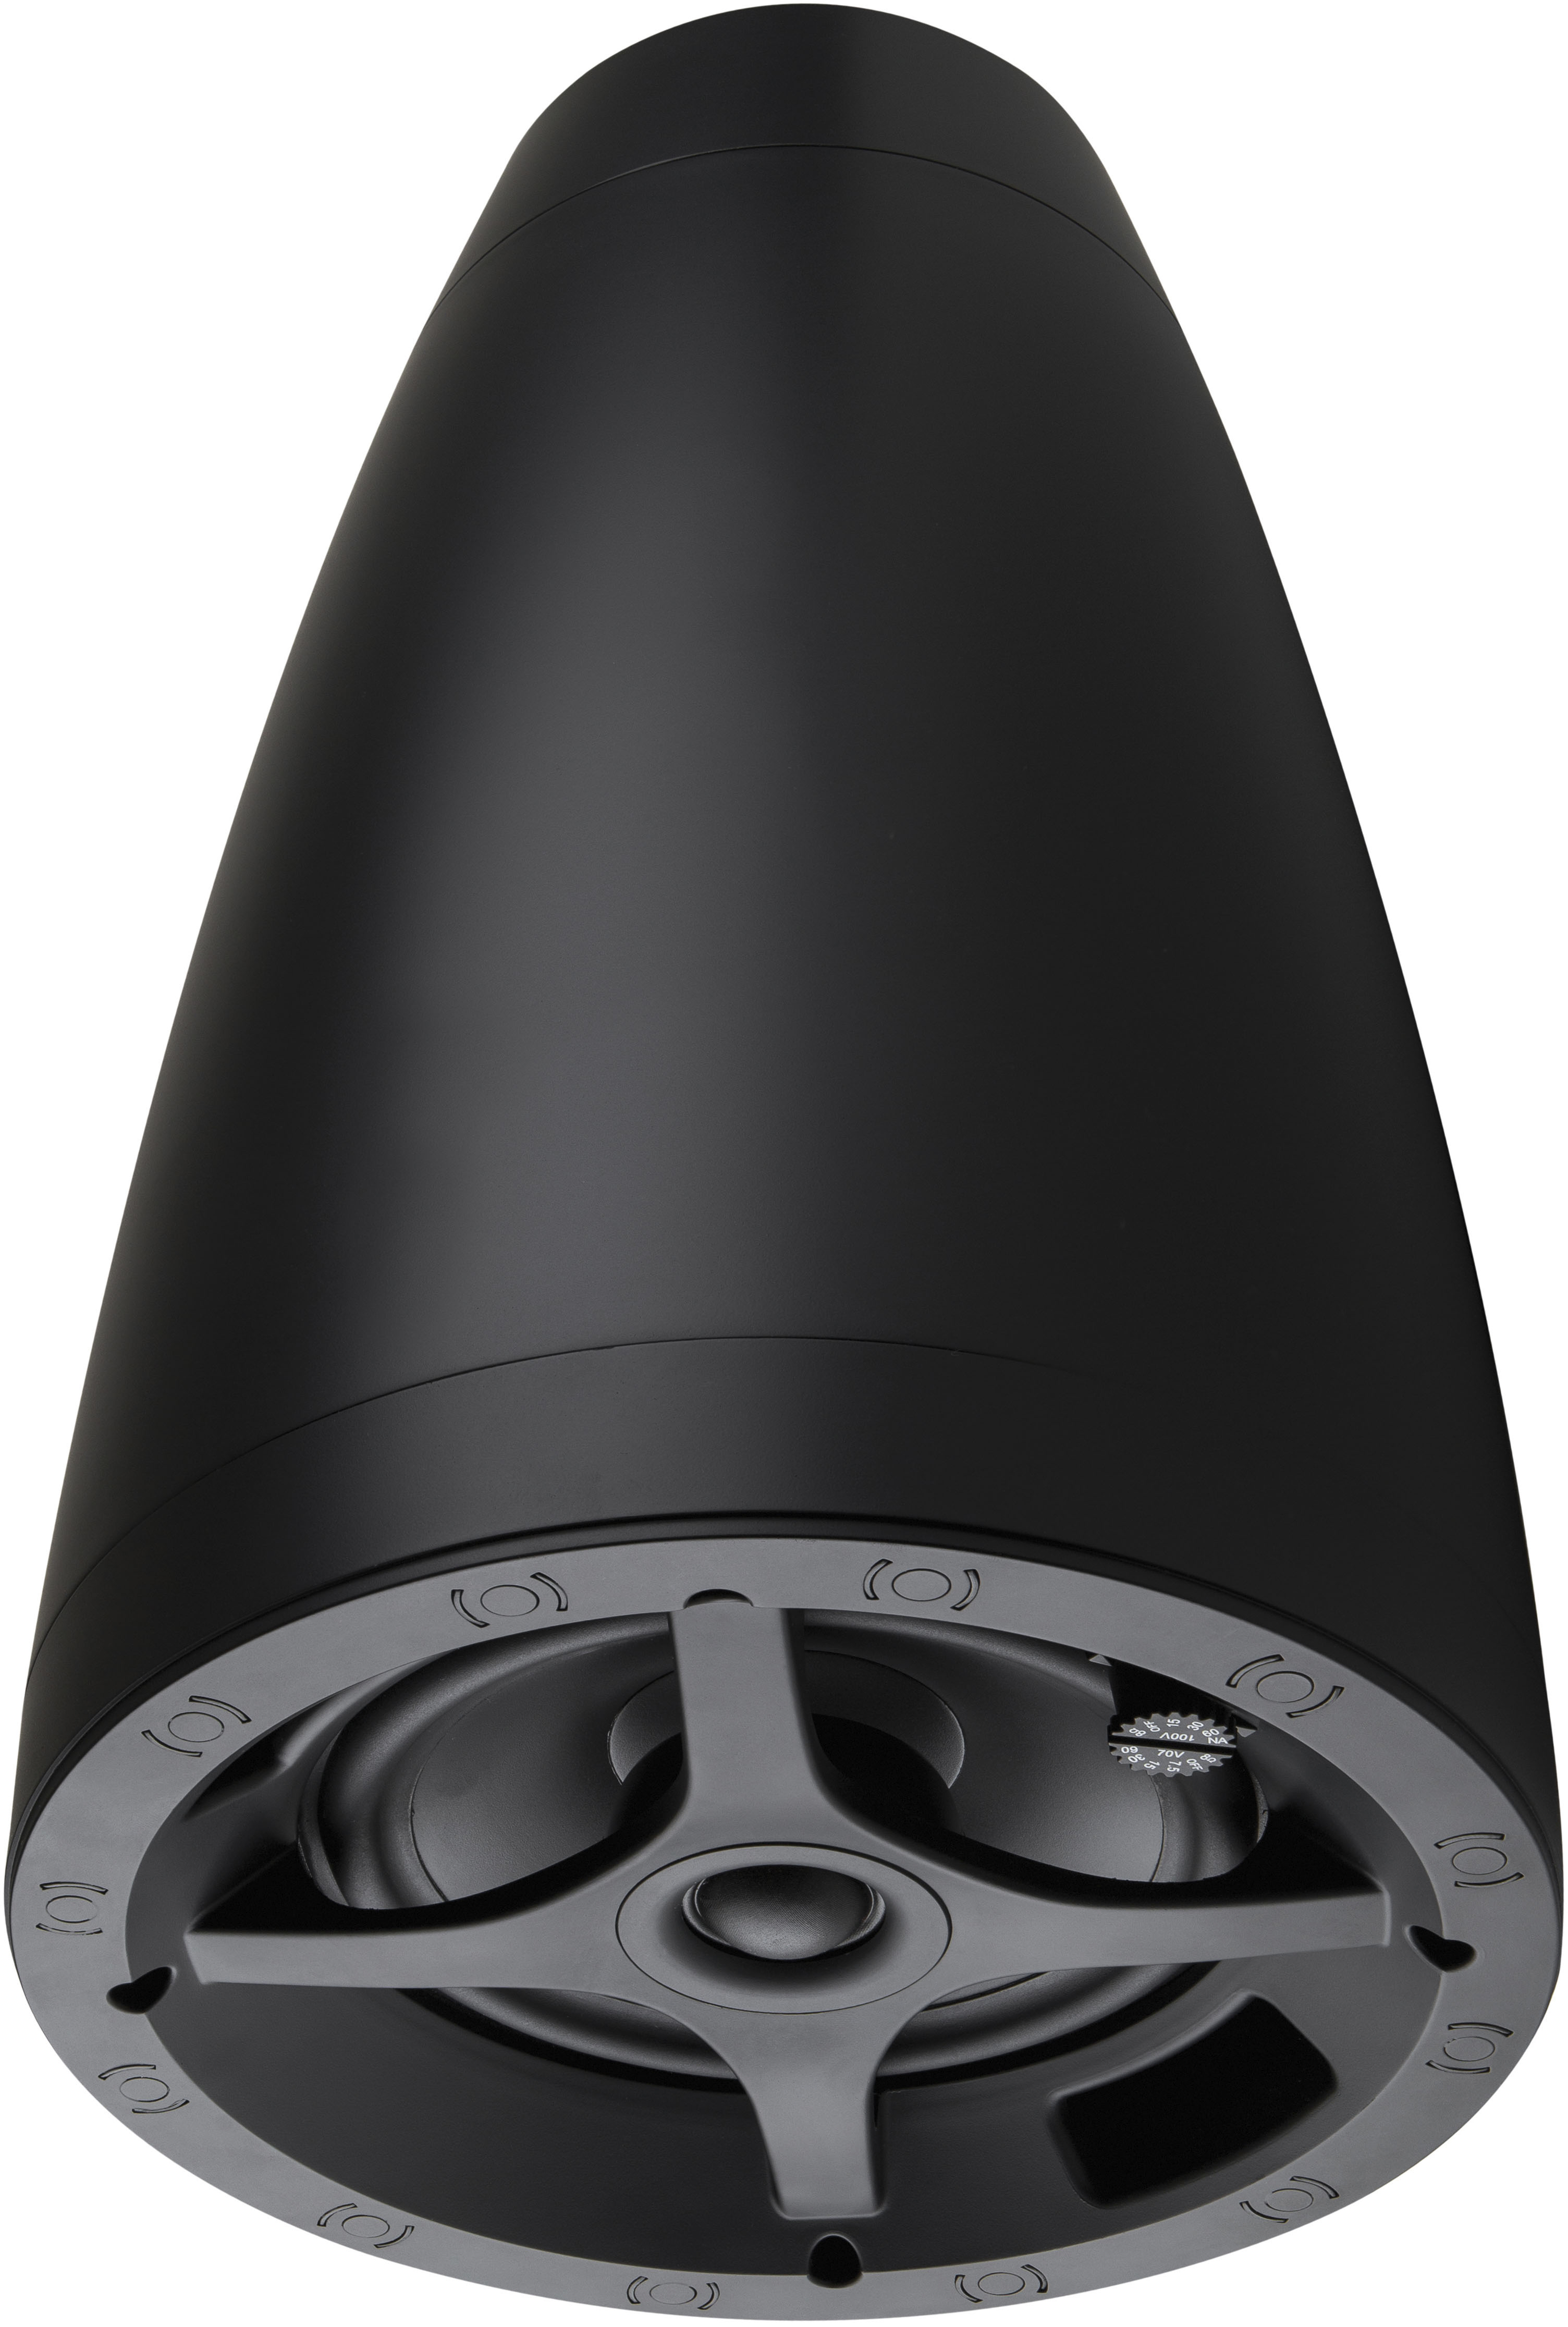 Angle View: Sonance - PS-P63T BLACK - Professional Series 6.5" Passive 2-Way Pendant Speakers (Each) - Black